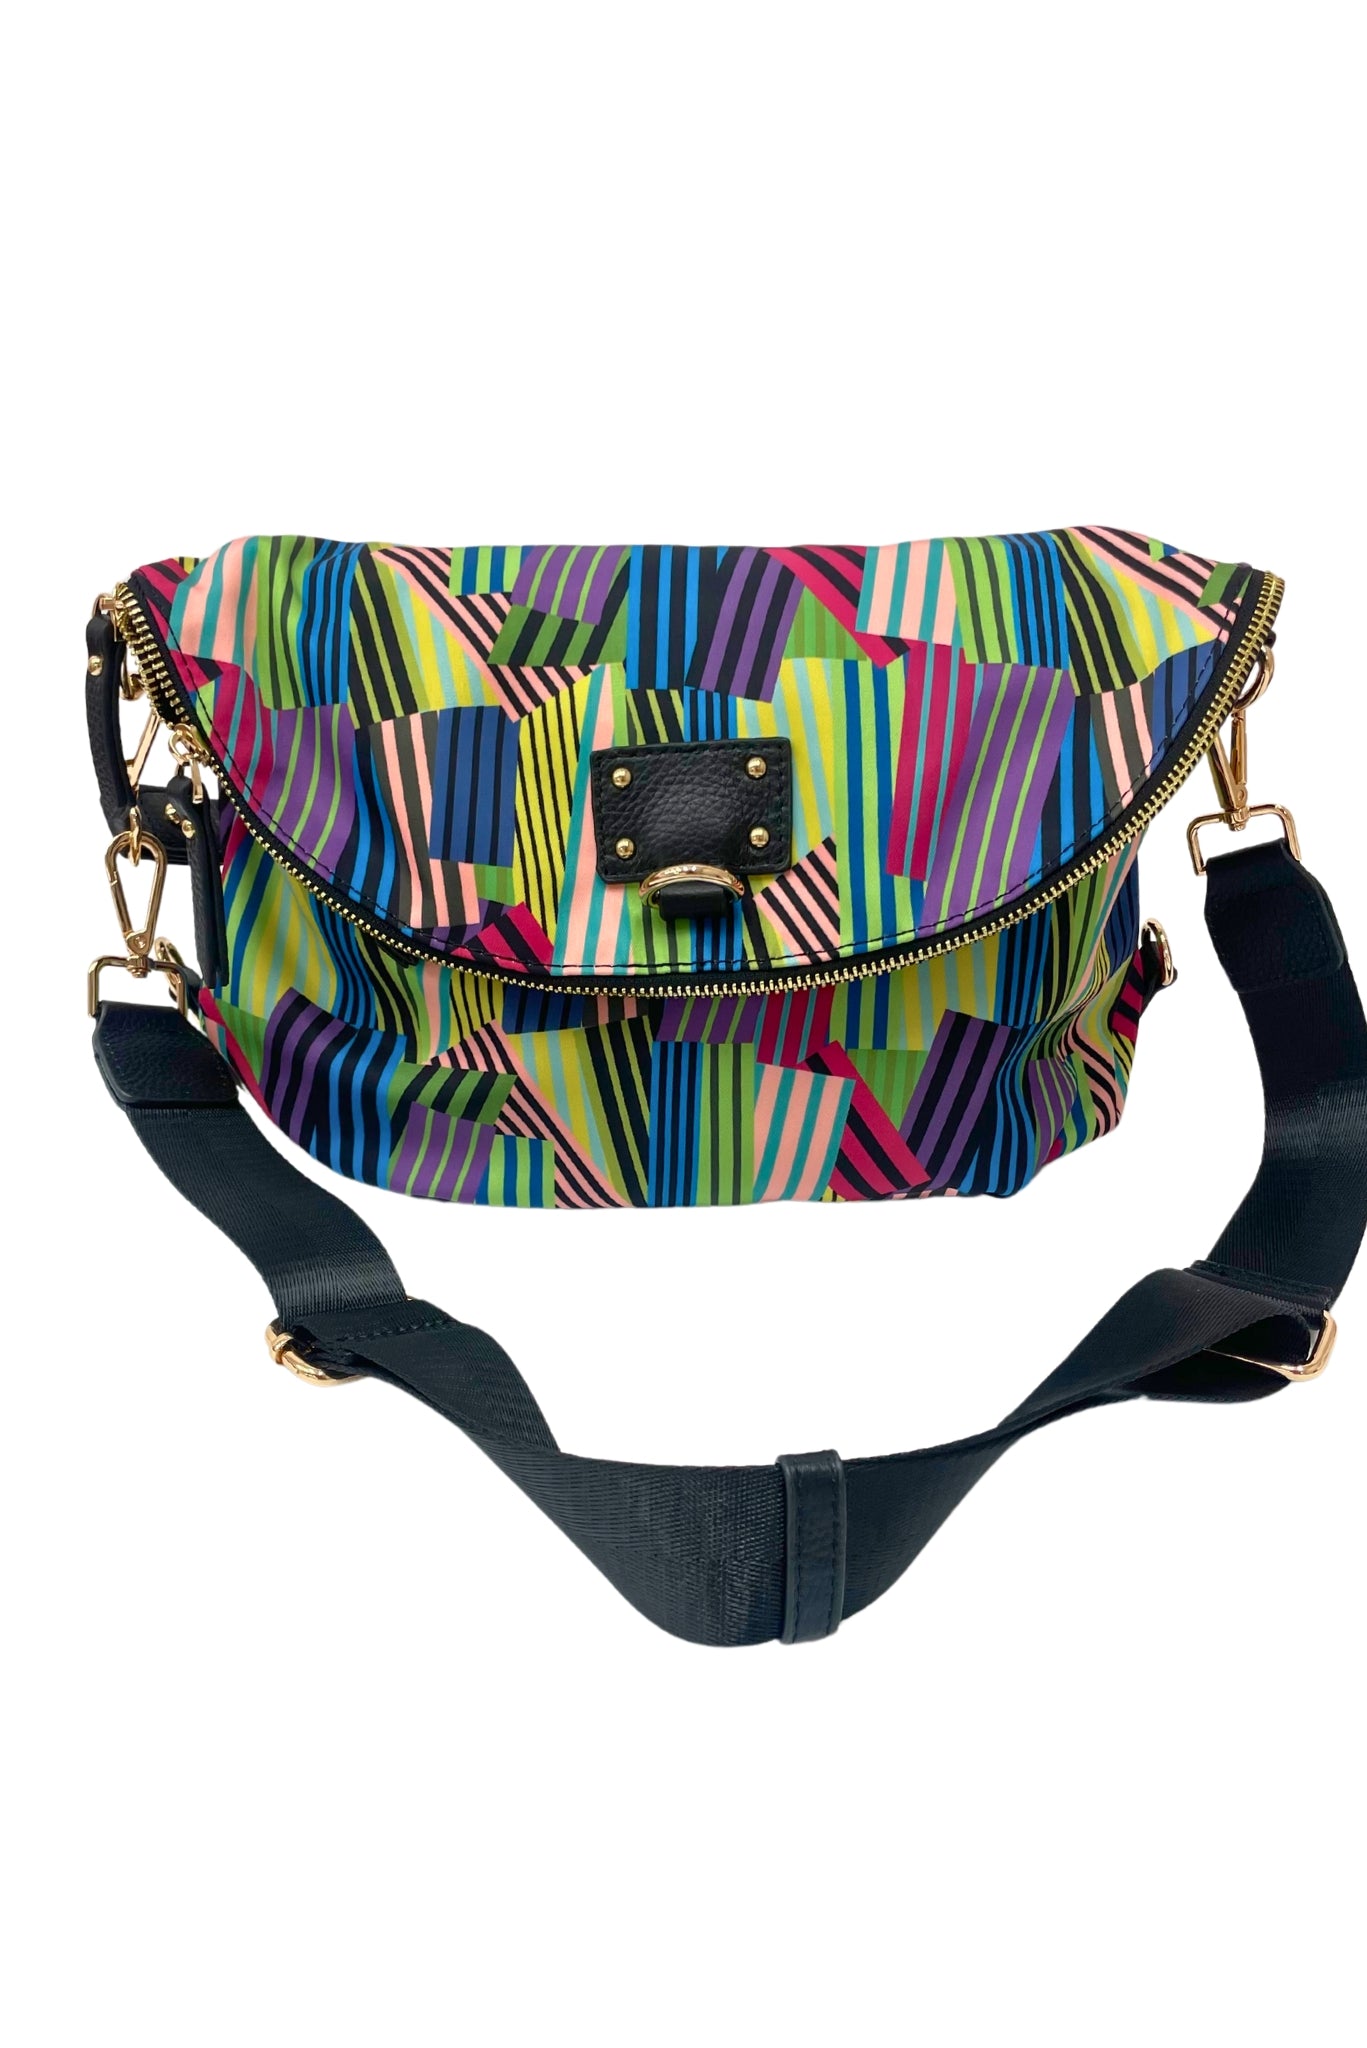 Buy Dasein Dasein Medium Top Handle Handbag for Women Designer Satchel  Purse Structured Shoulder Bag (1-pink) at Amazon.in